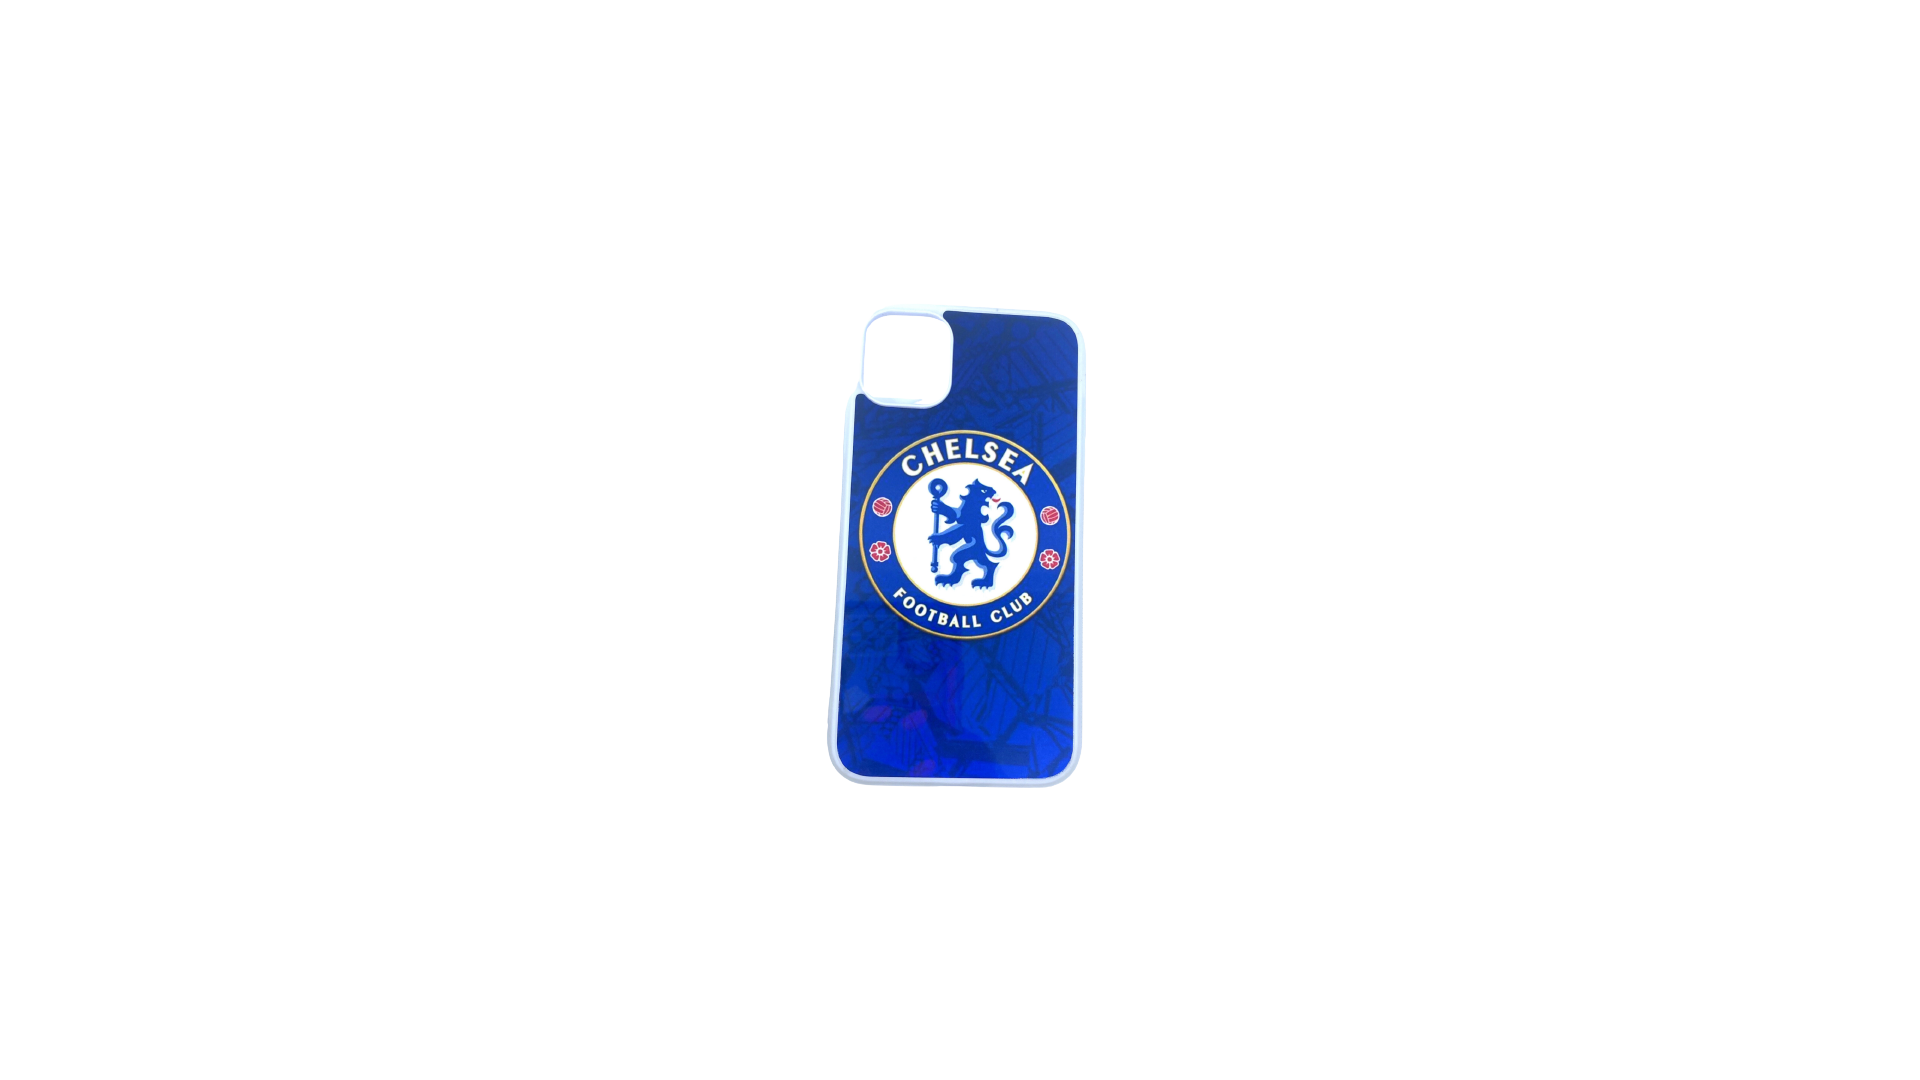 Coque iPhone - Chelsea Football Club